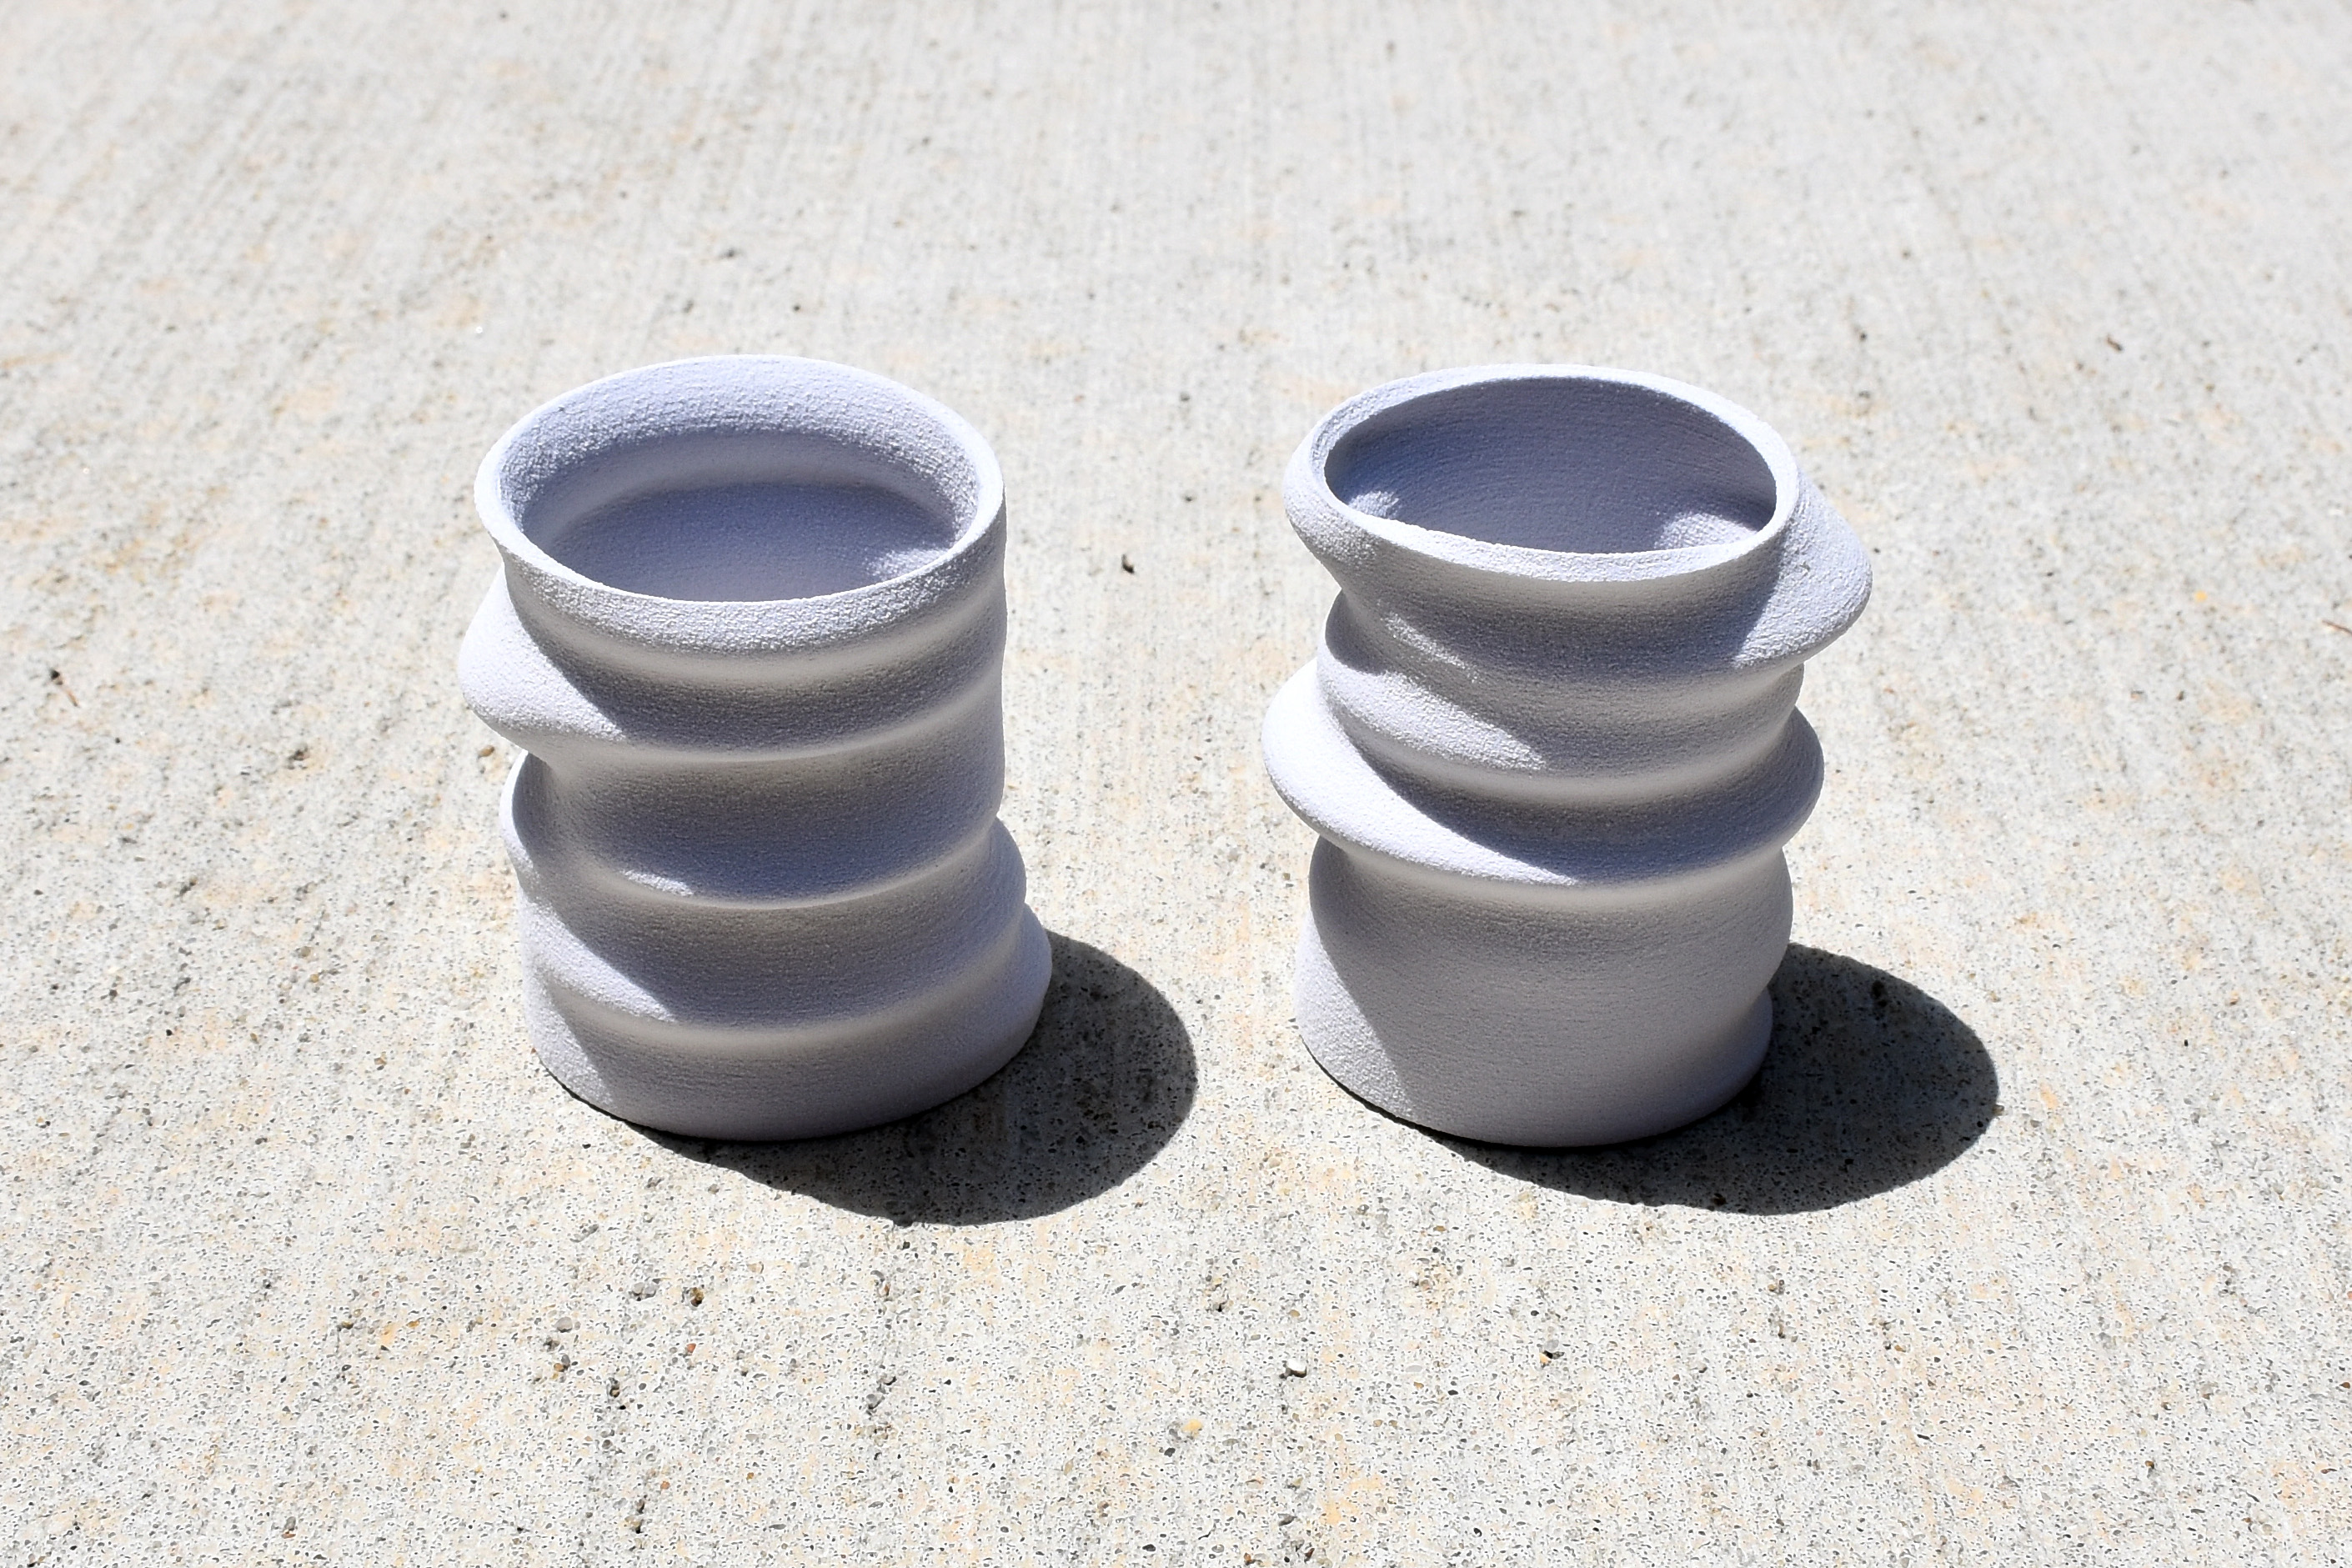 3D printed Loveform vessels